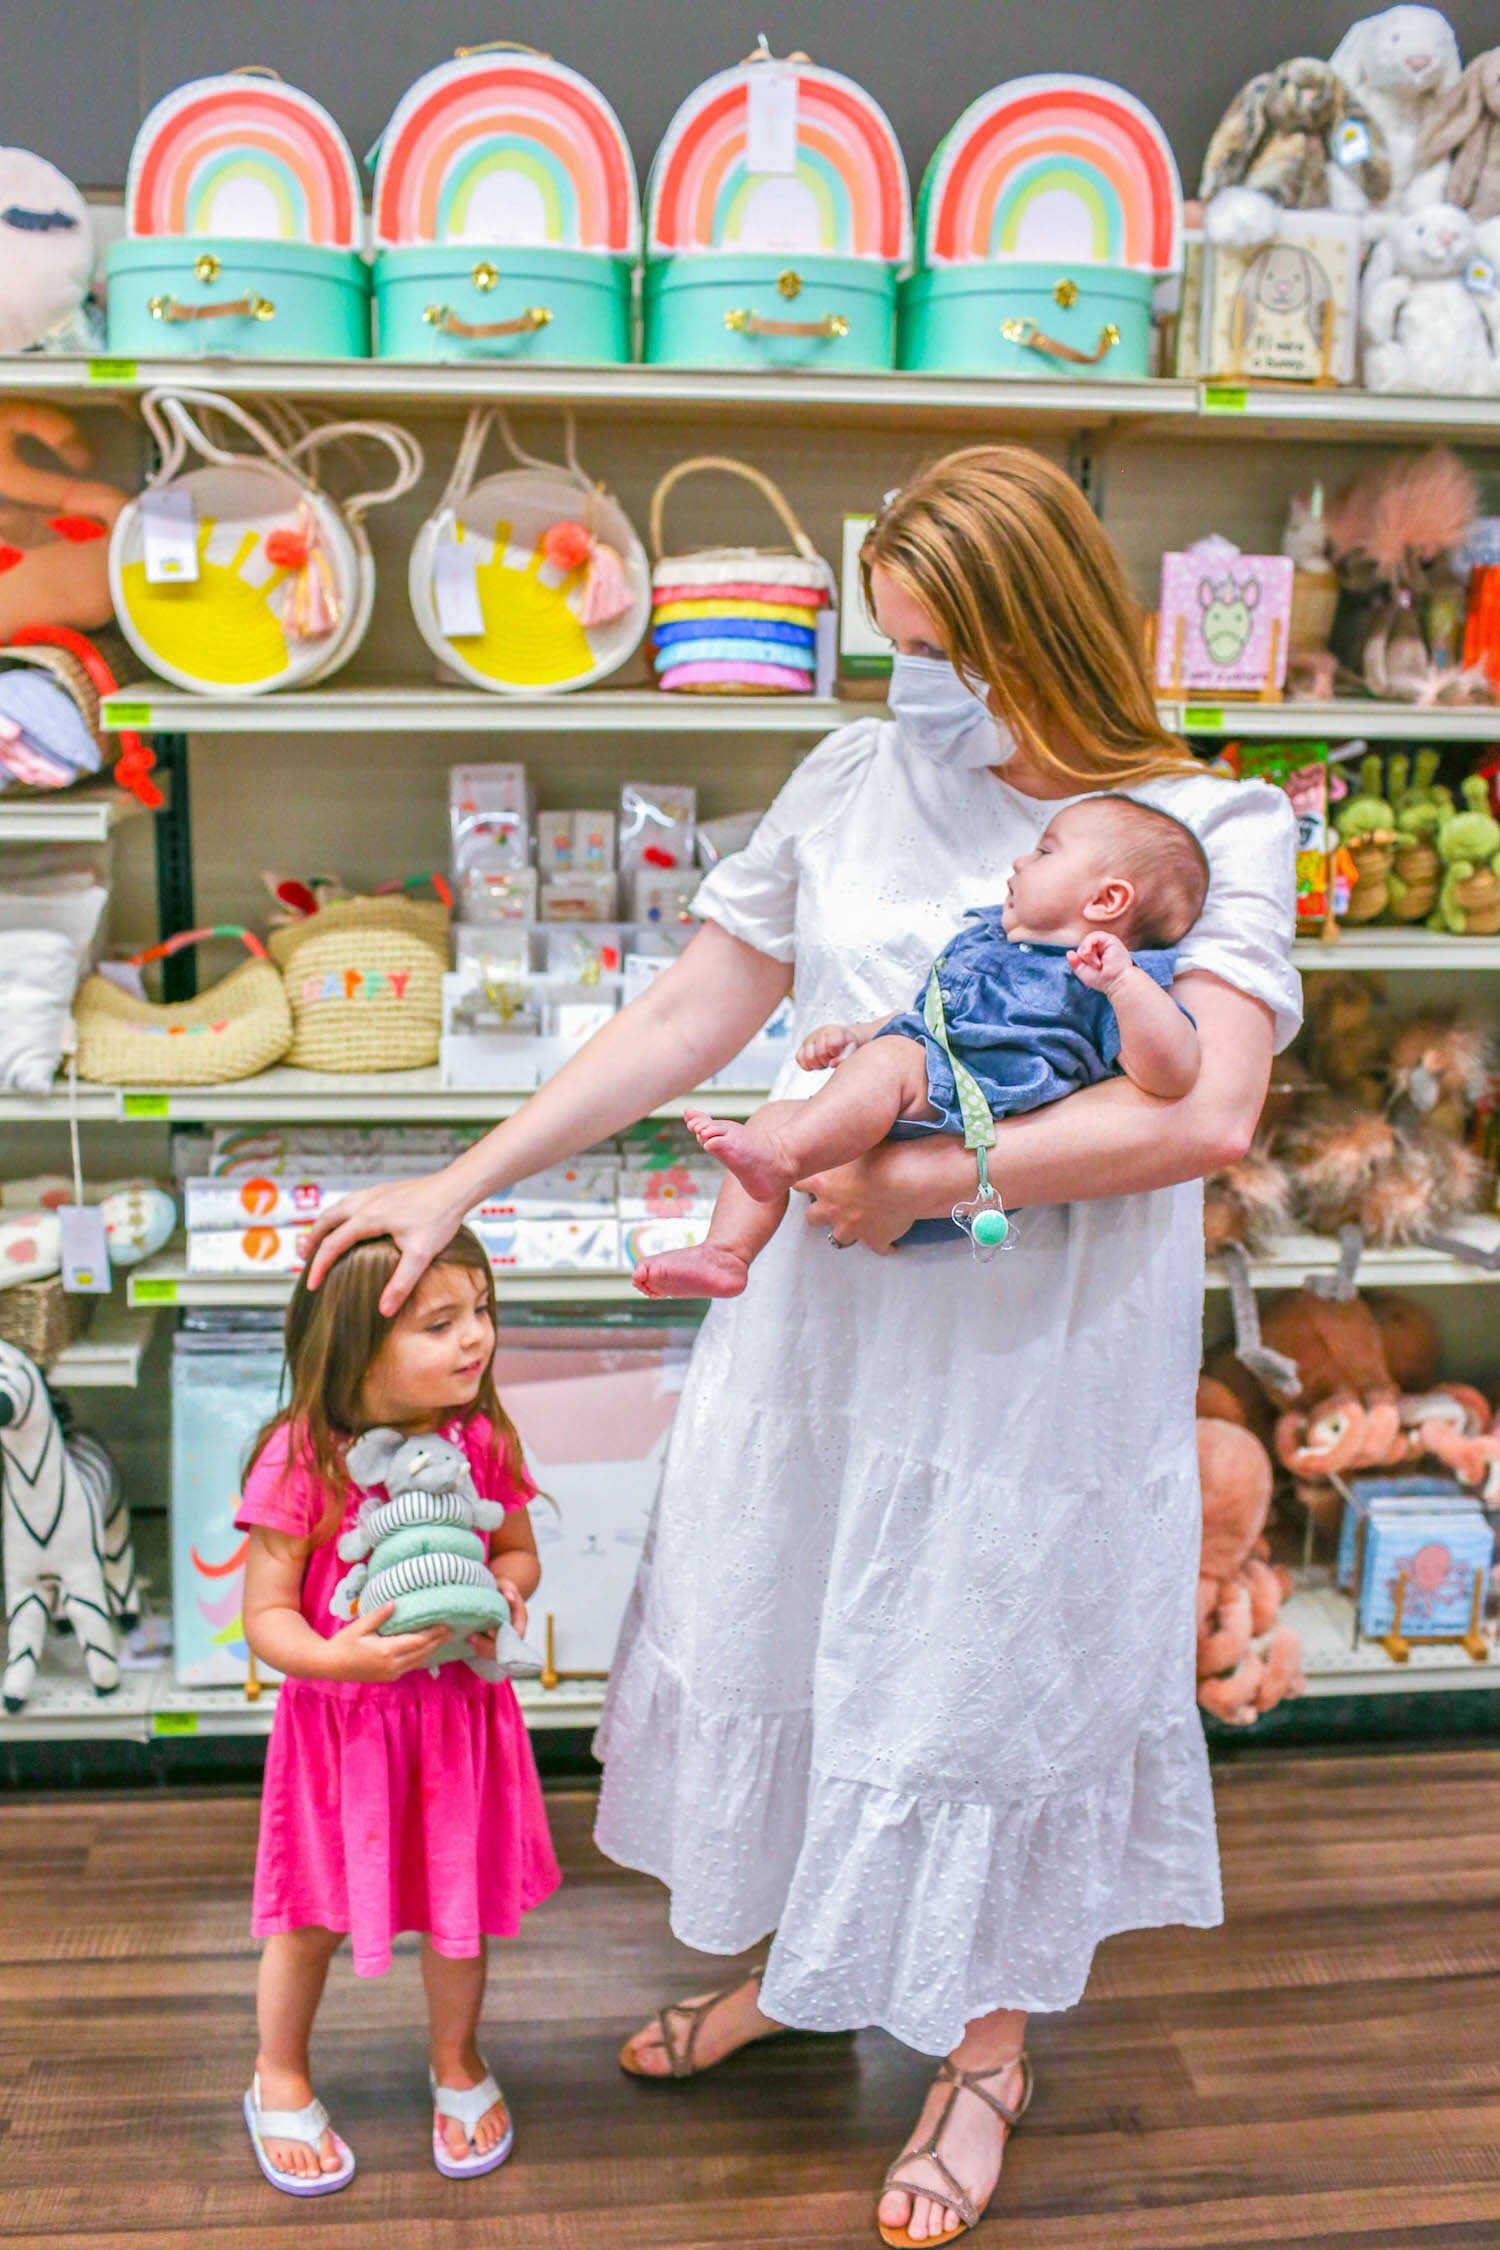 The Postpartum Wardrobe Shopping Guide